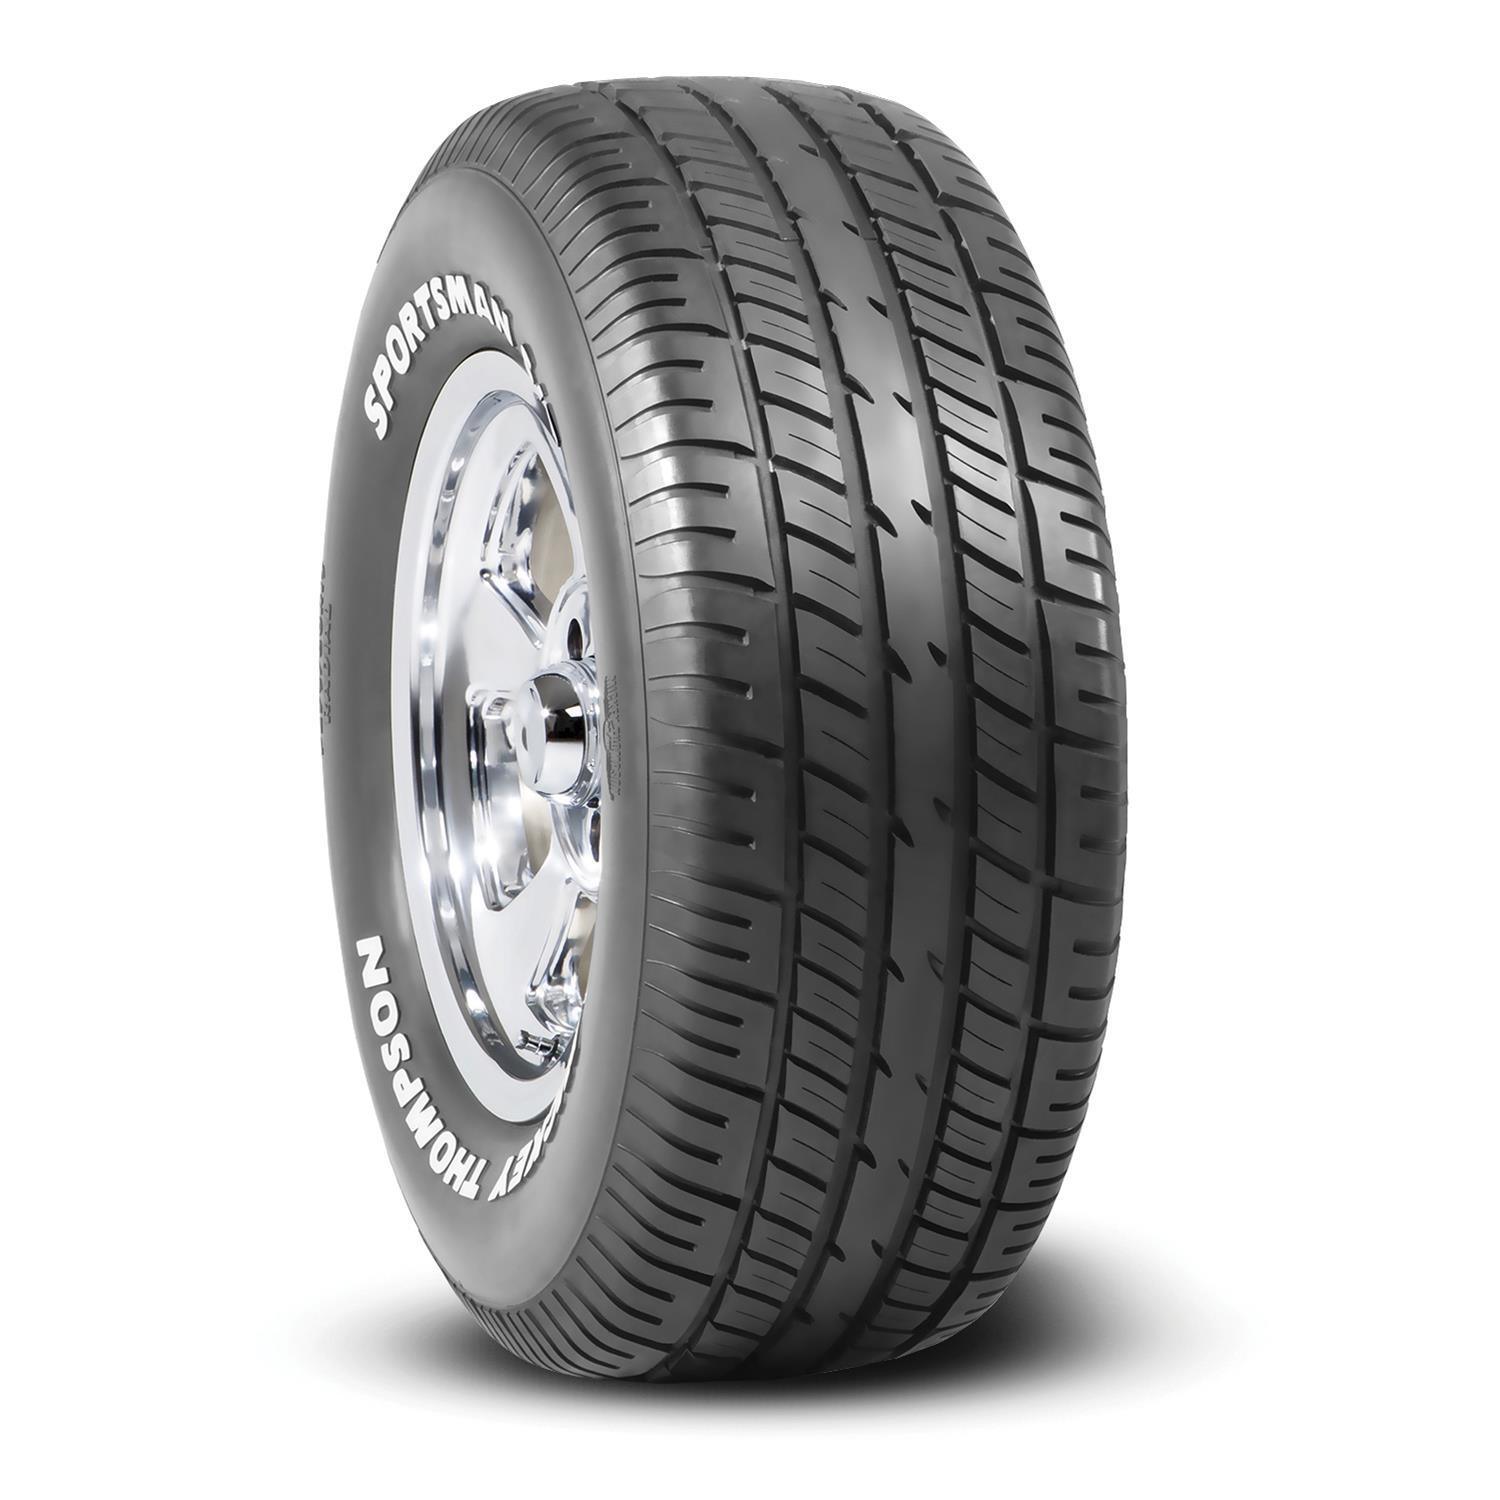 P295/50R15 Sportsman S/T Tire - Burlile Performance Products